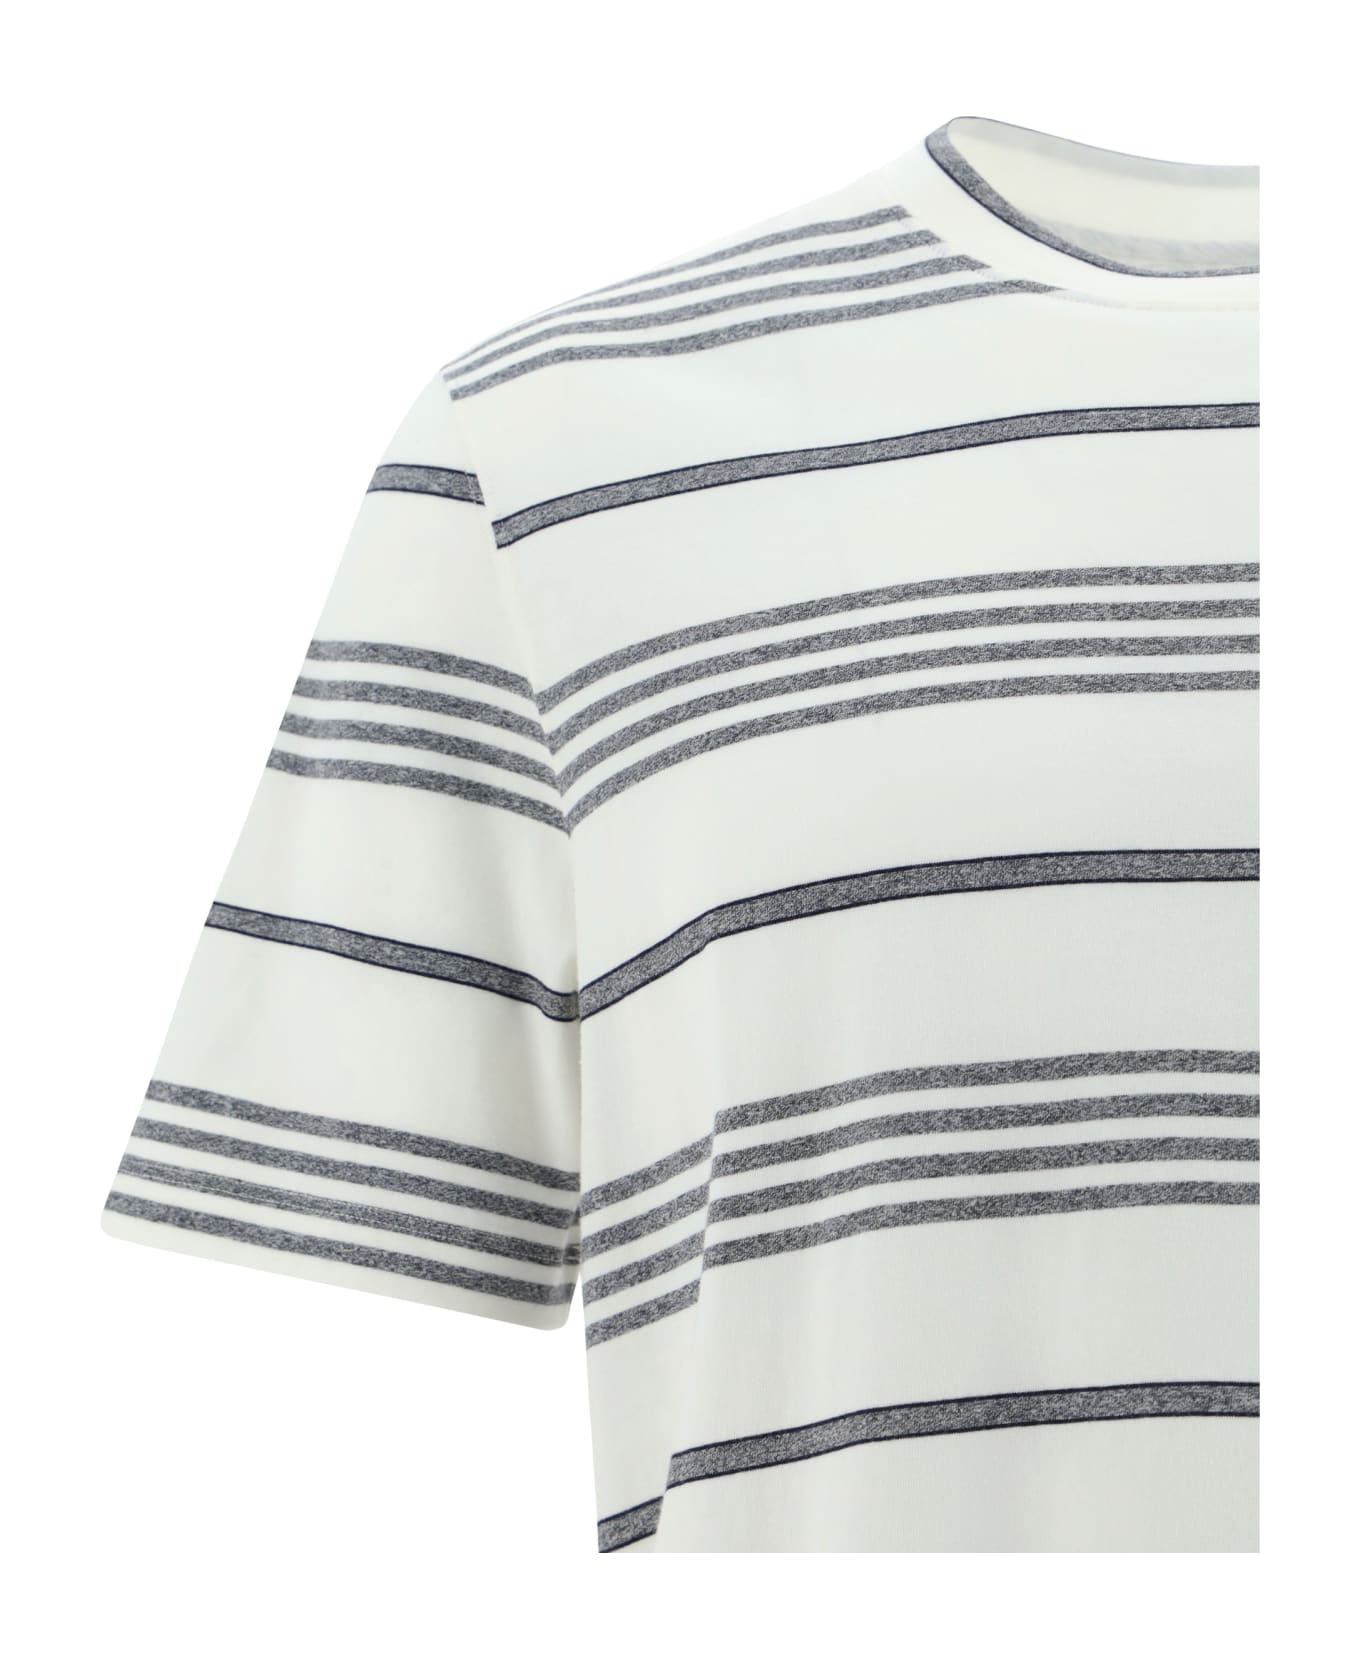 Brunello Cucinelli Cotton T-shirt - Off White/grigio/blu